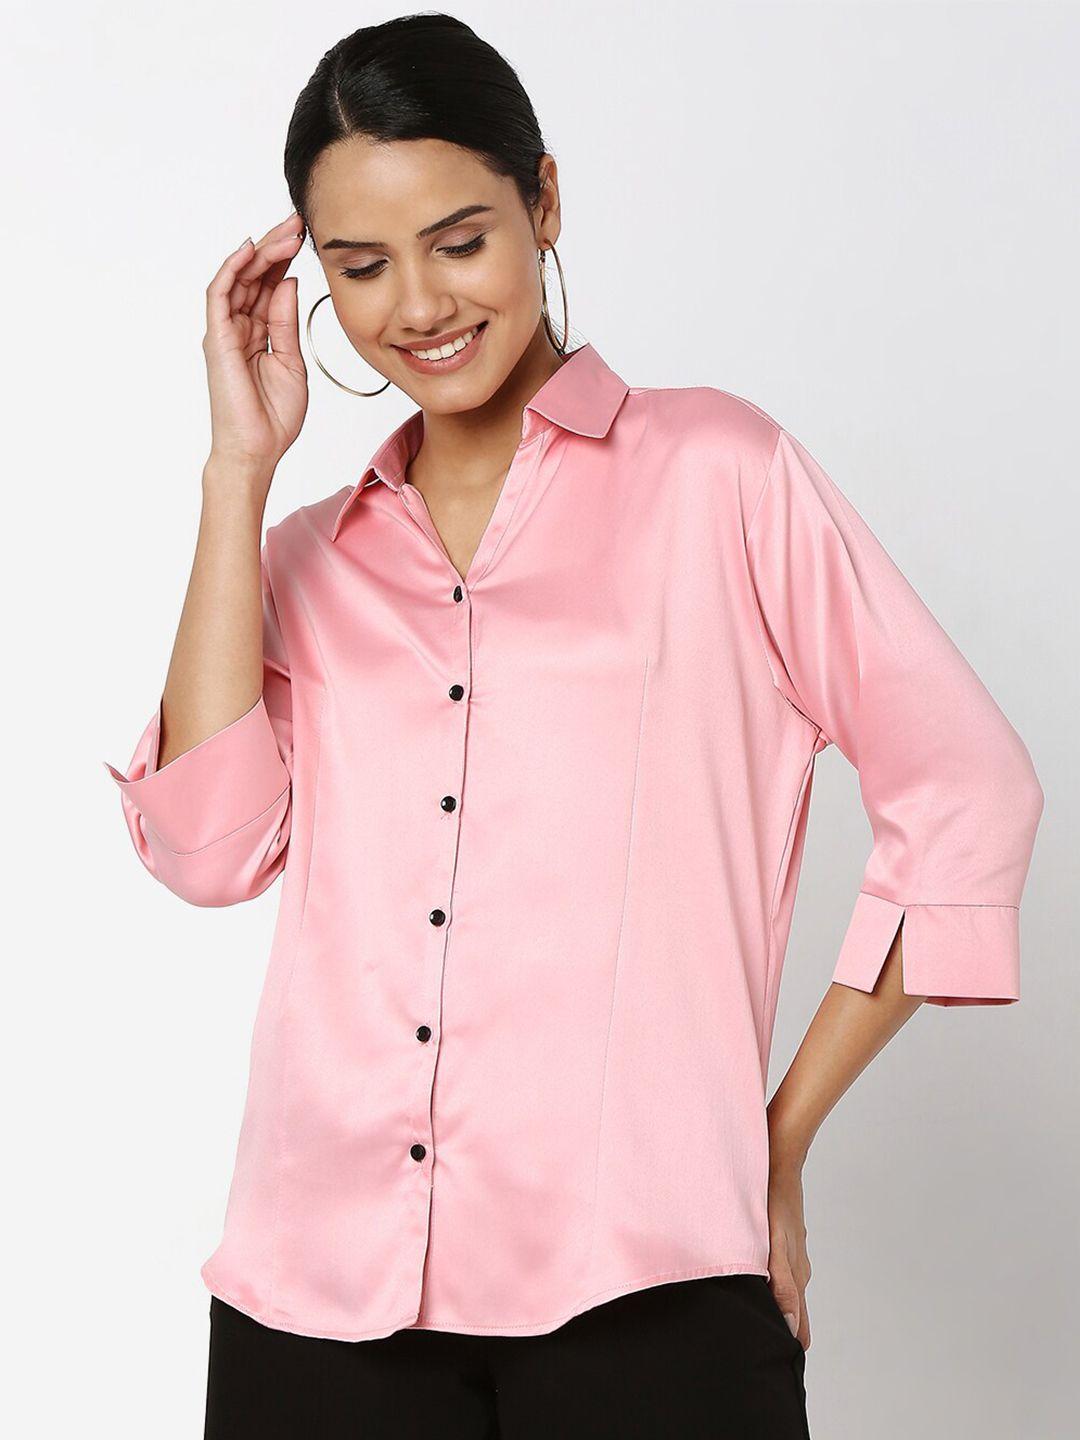 smarty-pants-women-pink-satin-casual-shirt